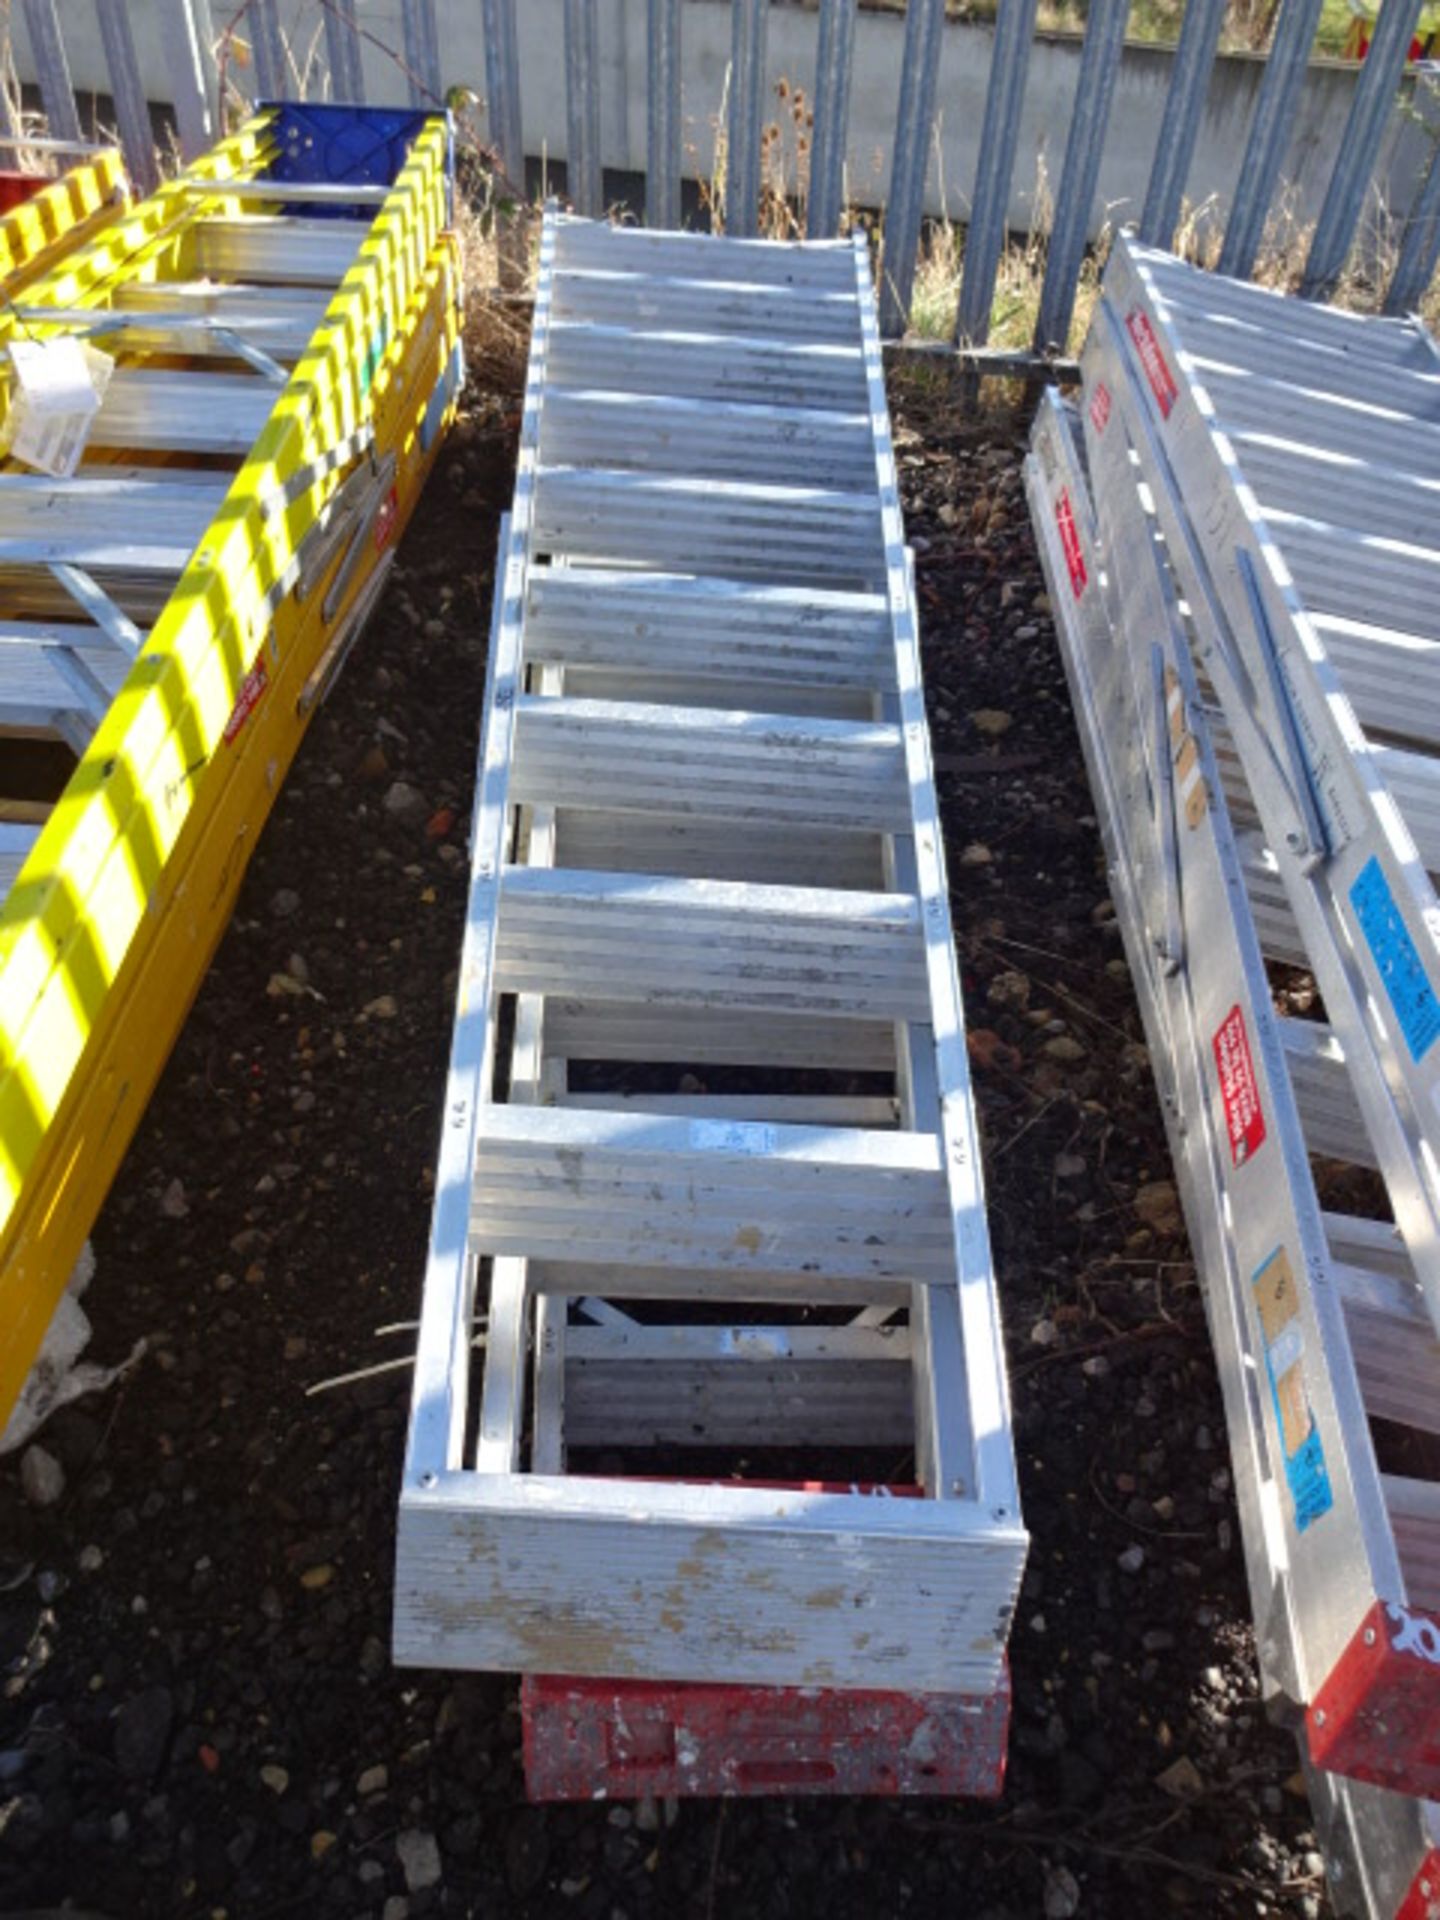 3 x step ladders